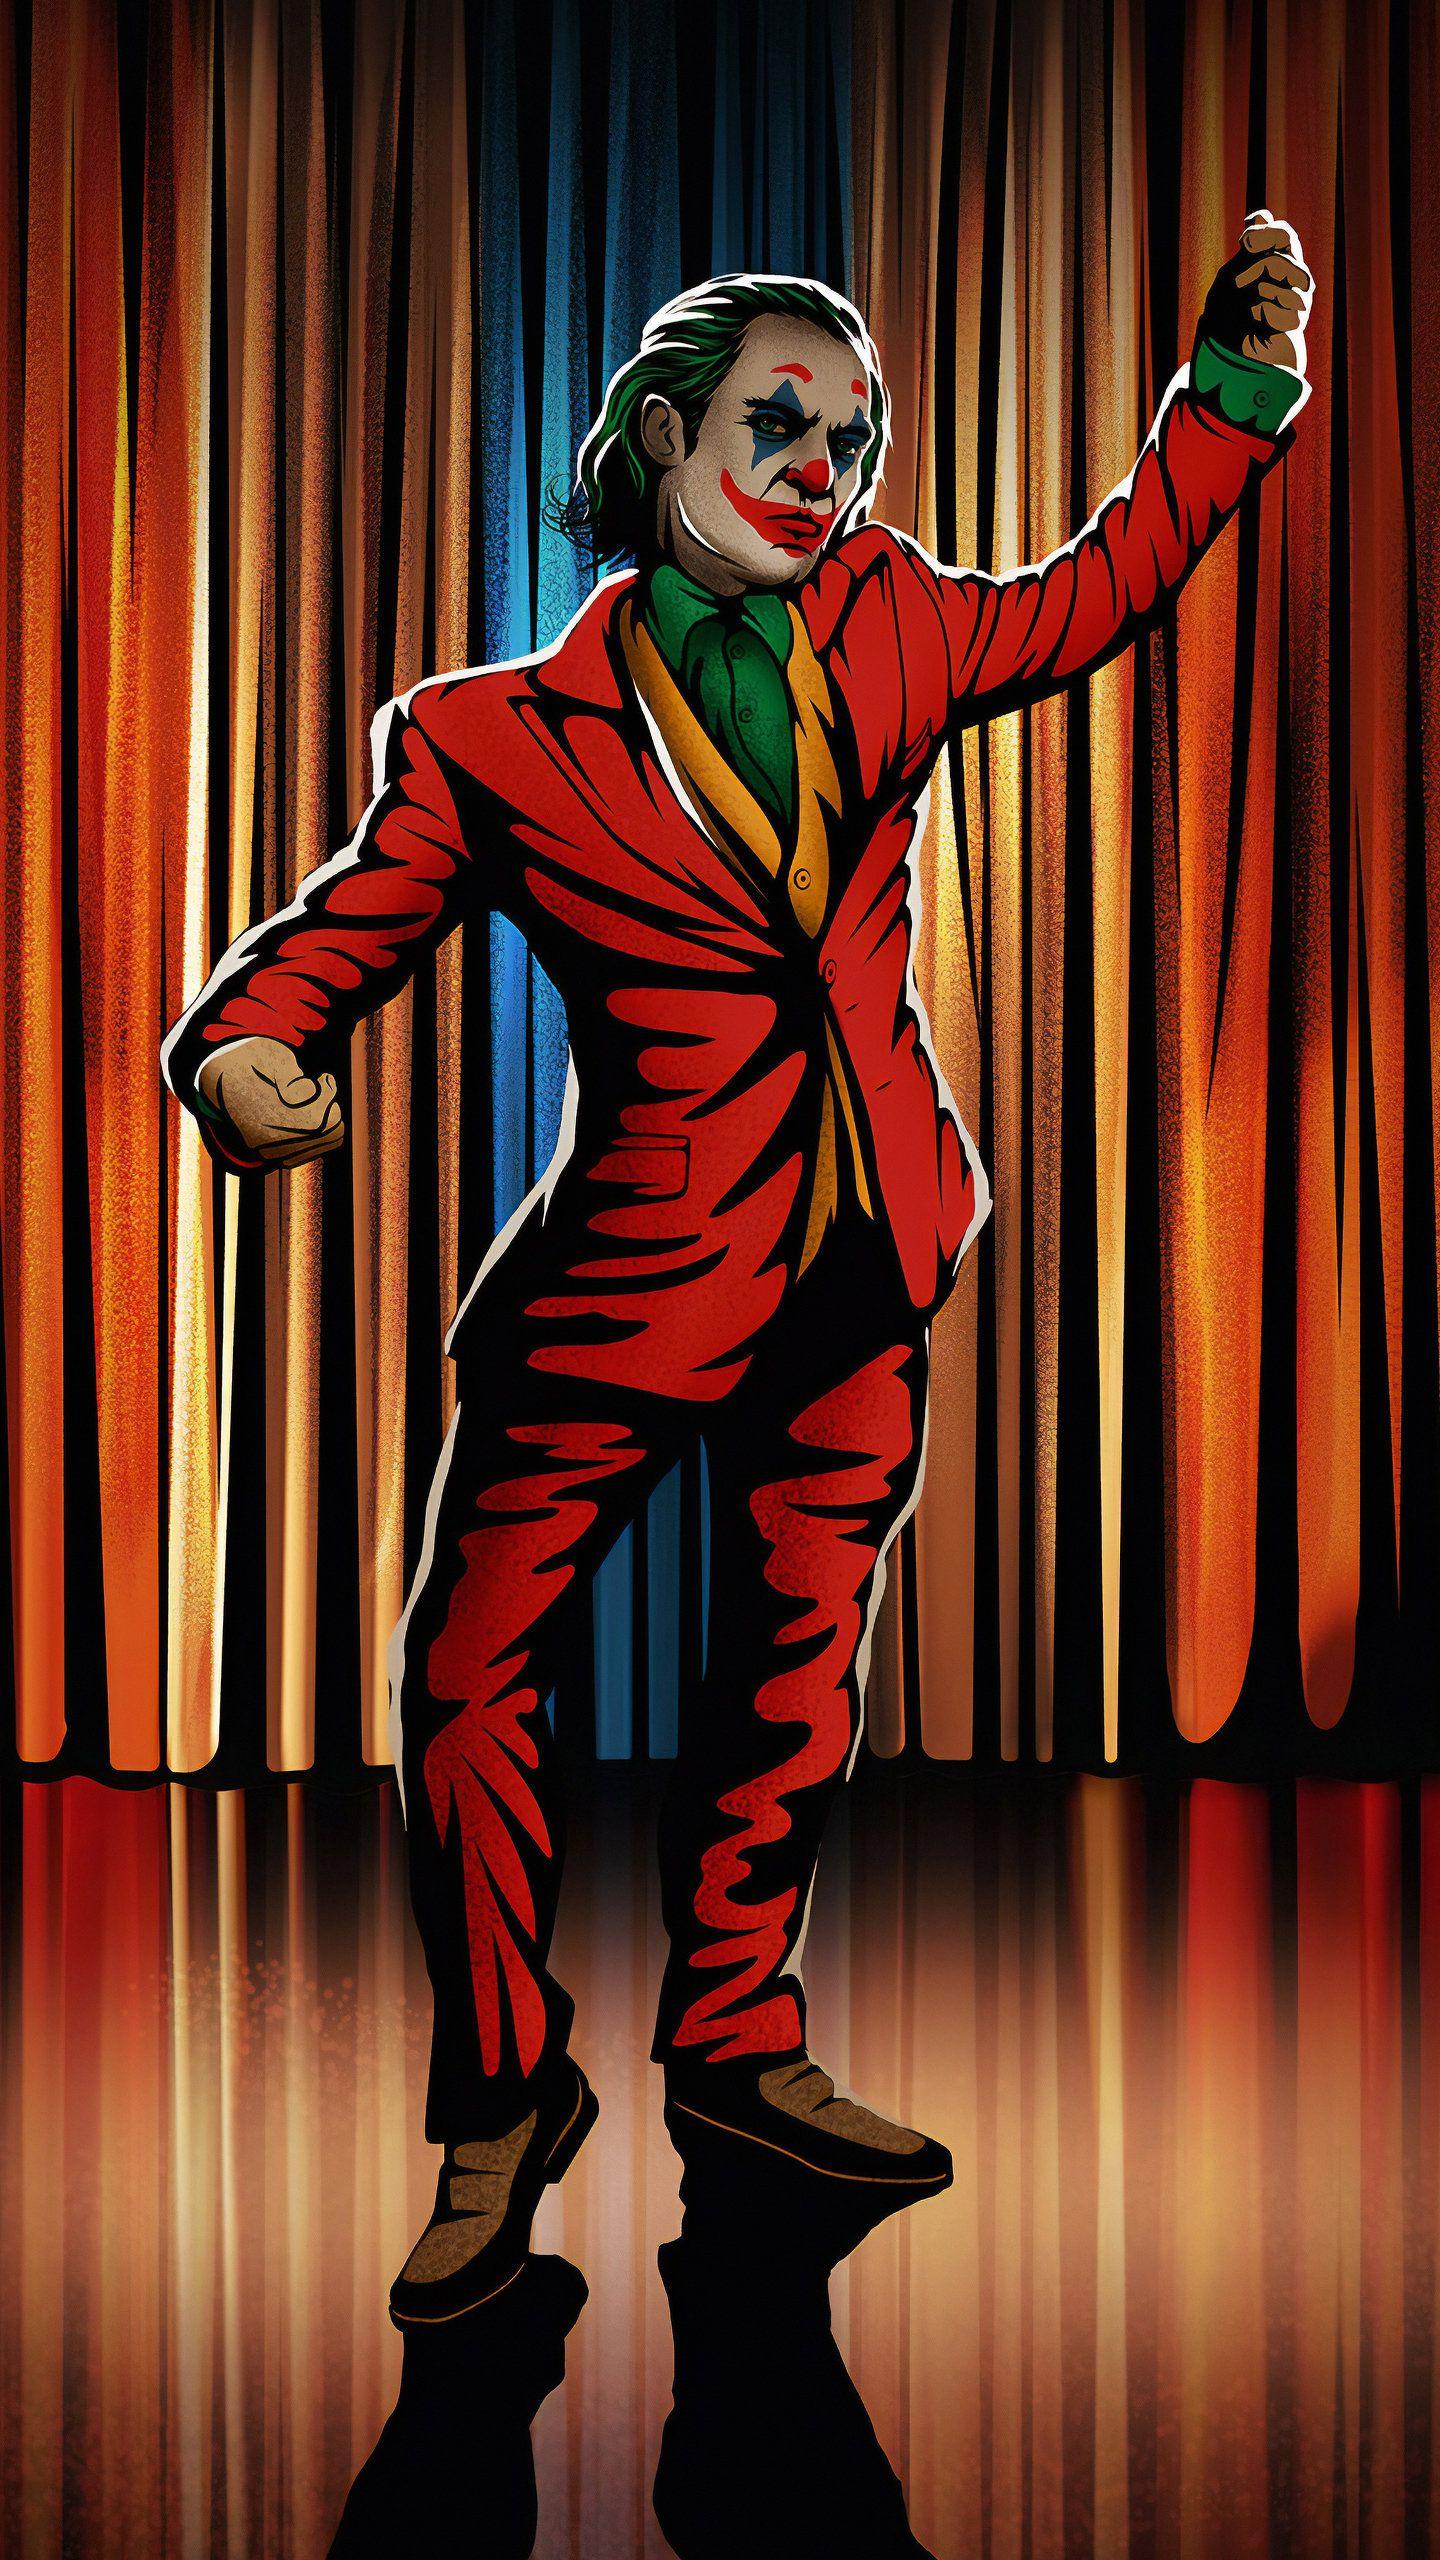 Joker Dancing, HD Superheroes Wallpaper Photo and Picture